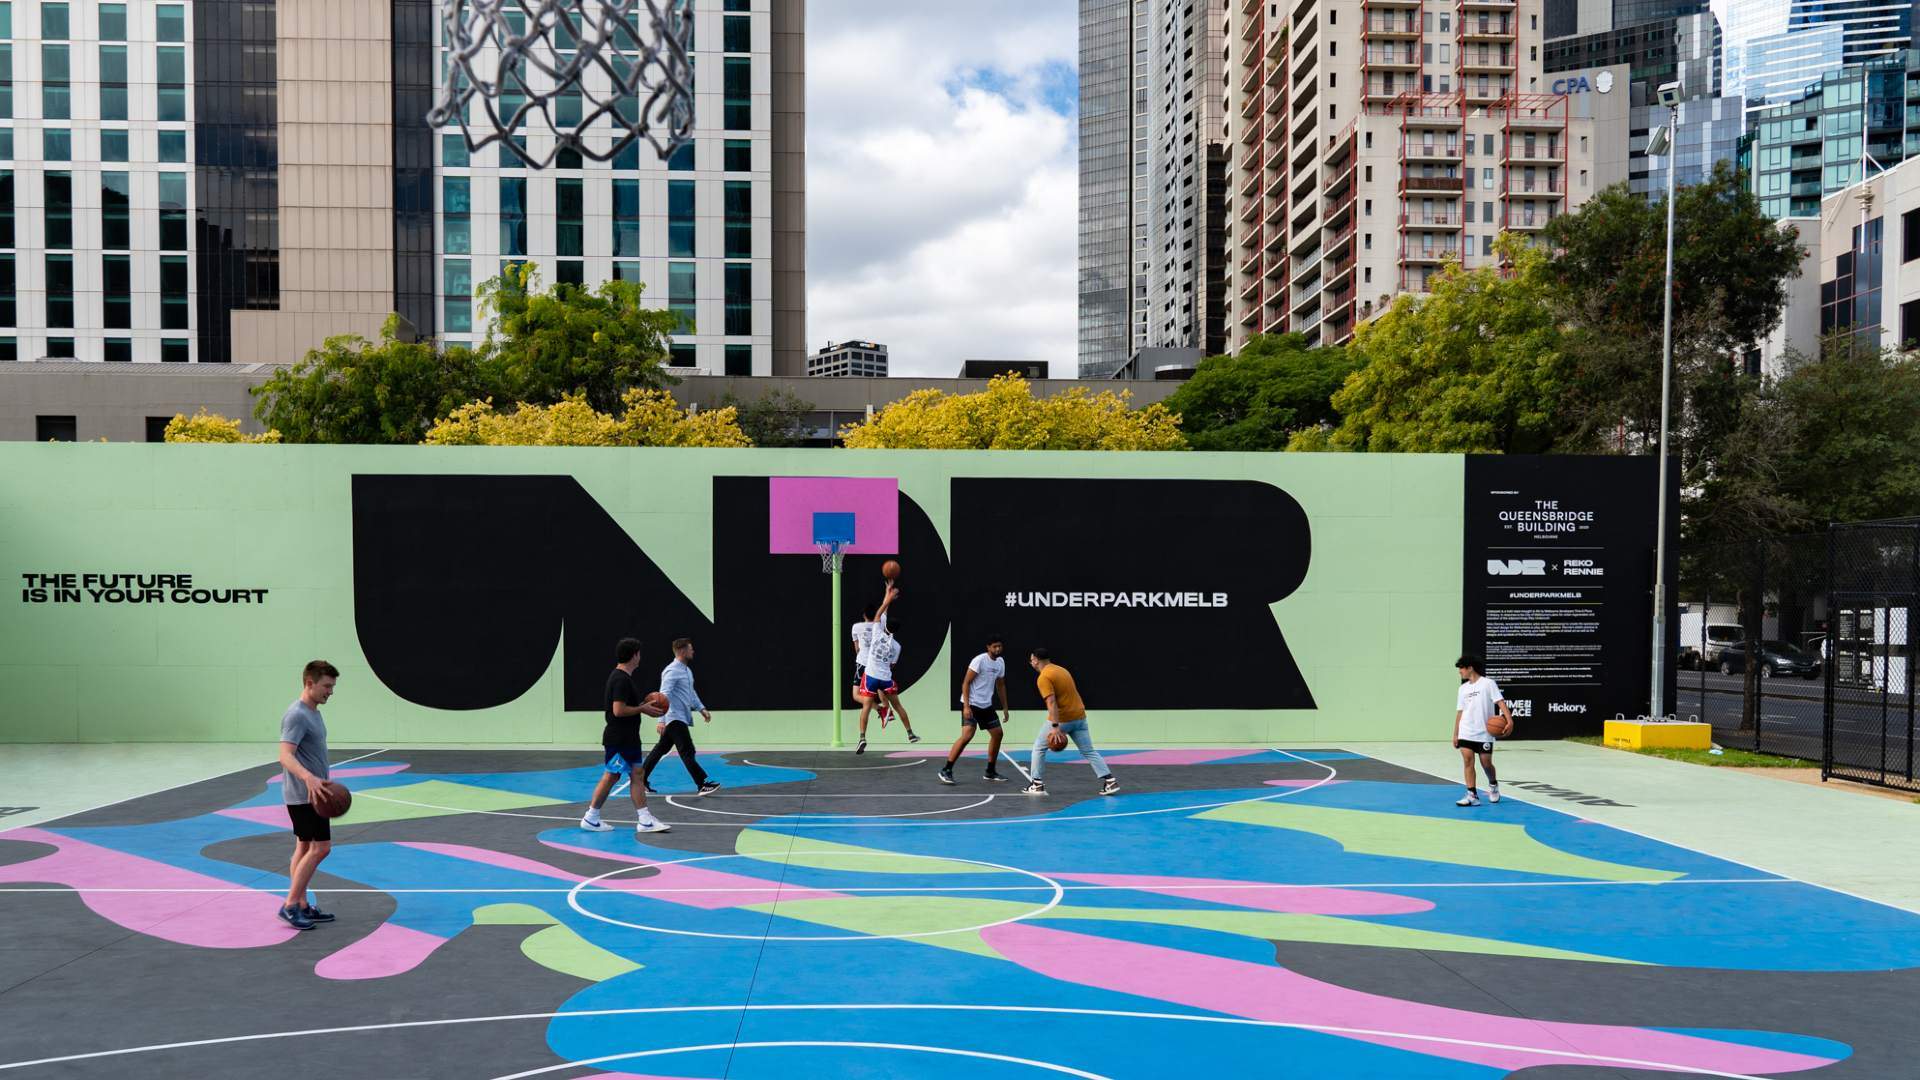 Reko Rennie Has Transformed a Melbourne Basketball Court Into a Colourful Public Art Installation